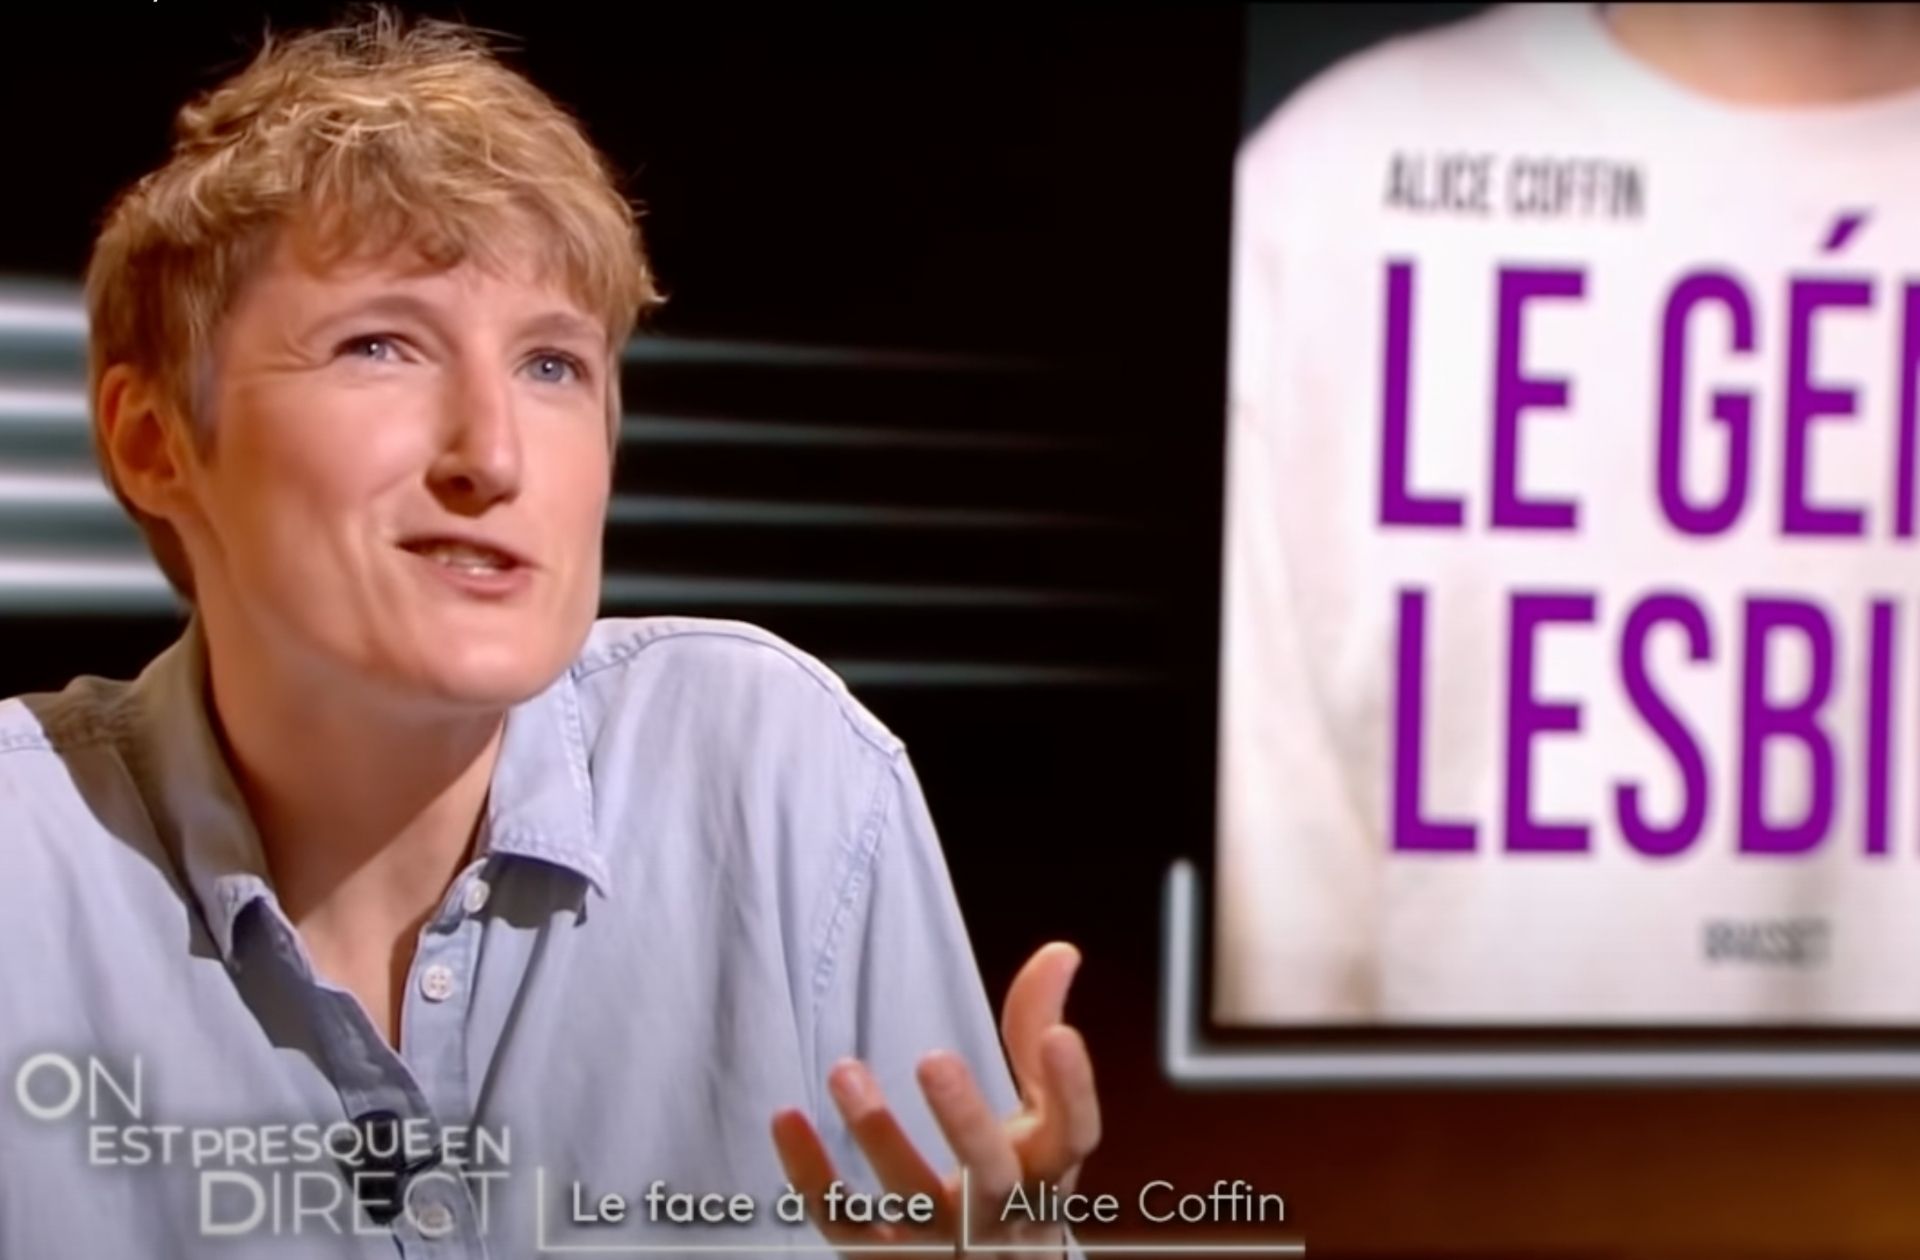 alice-coffin-le-genie-lesbien-interview-france-2